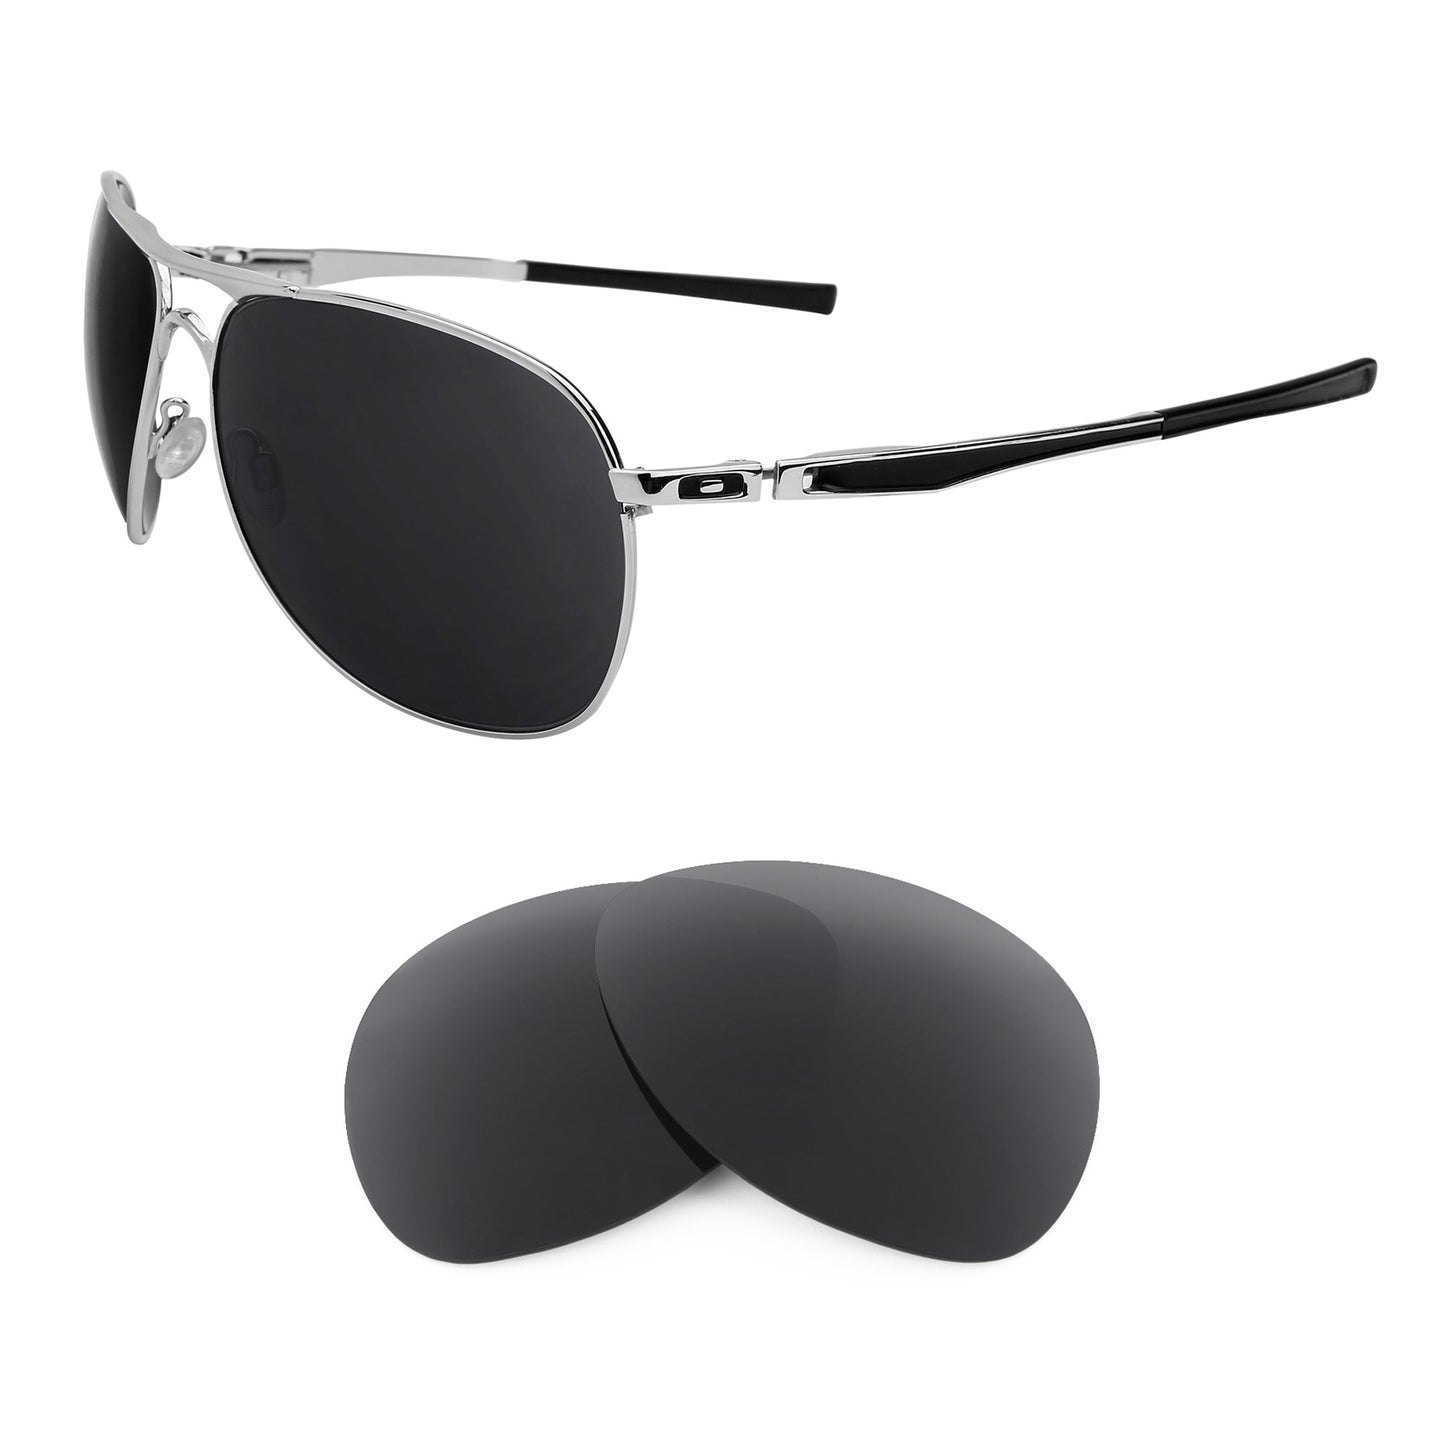 Oakley Plaintiff sunglasses with replacement lenses